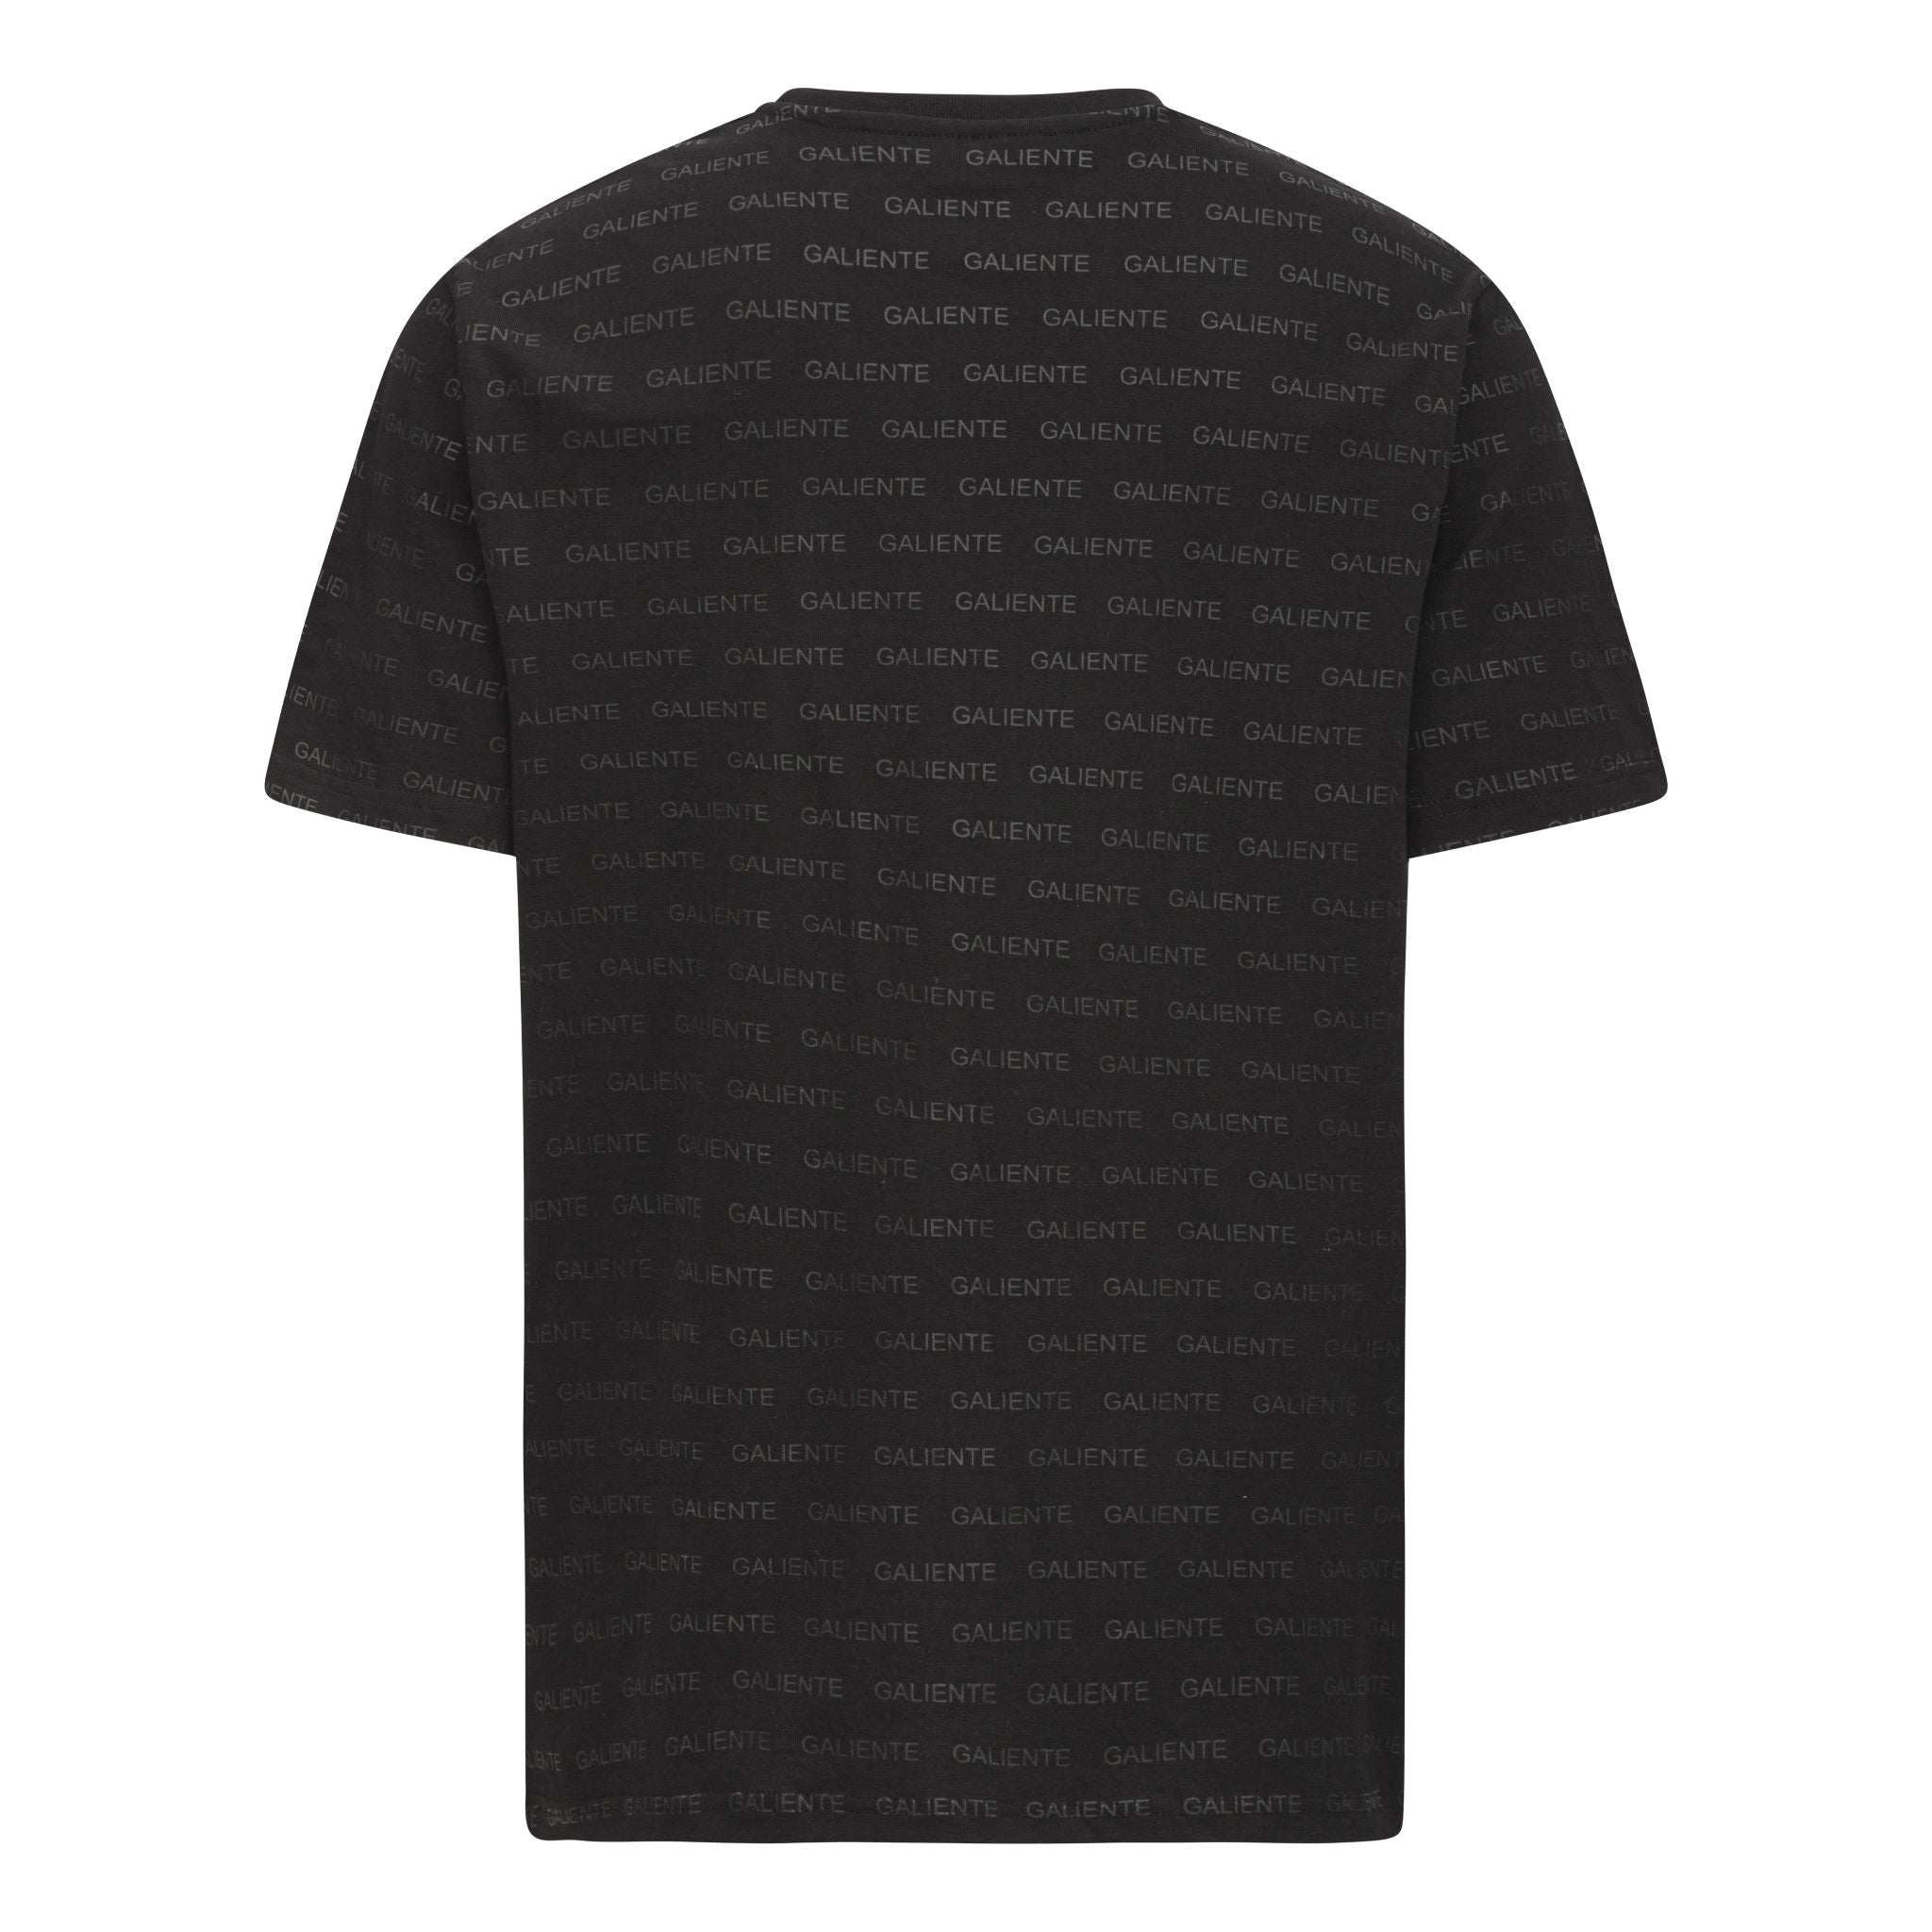 Oversize svart T-shirt med Galiente-tryck överallt